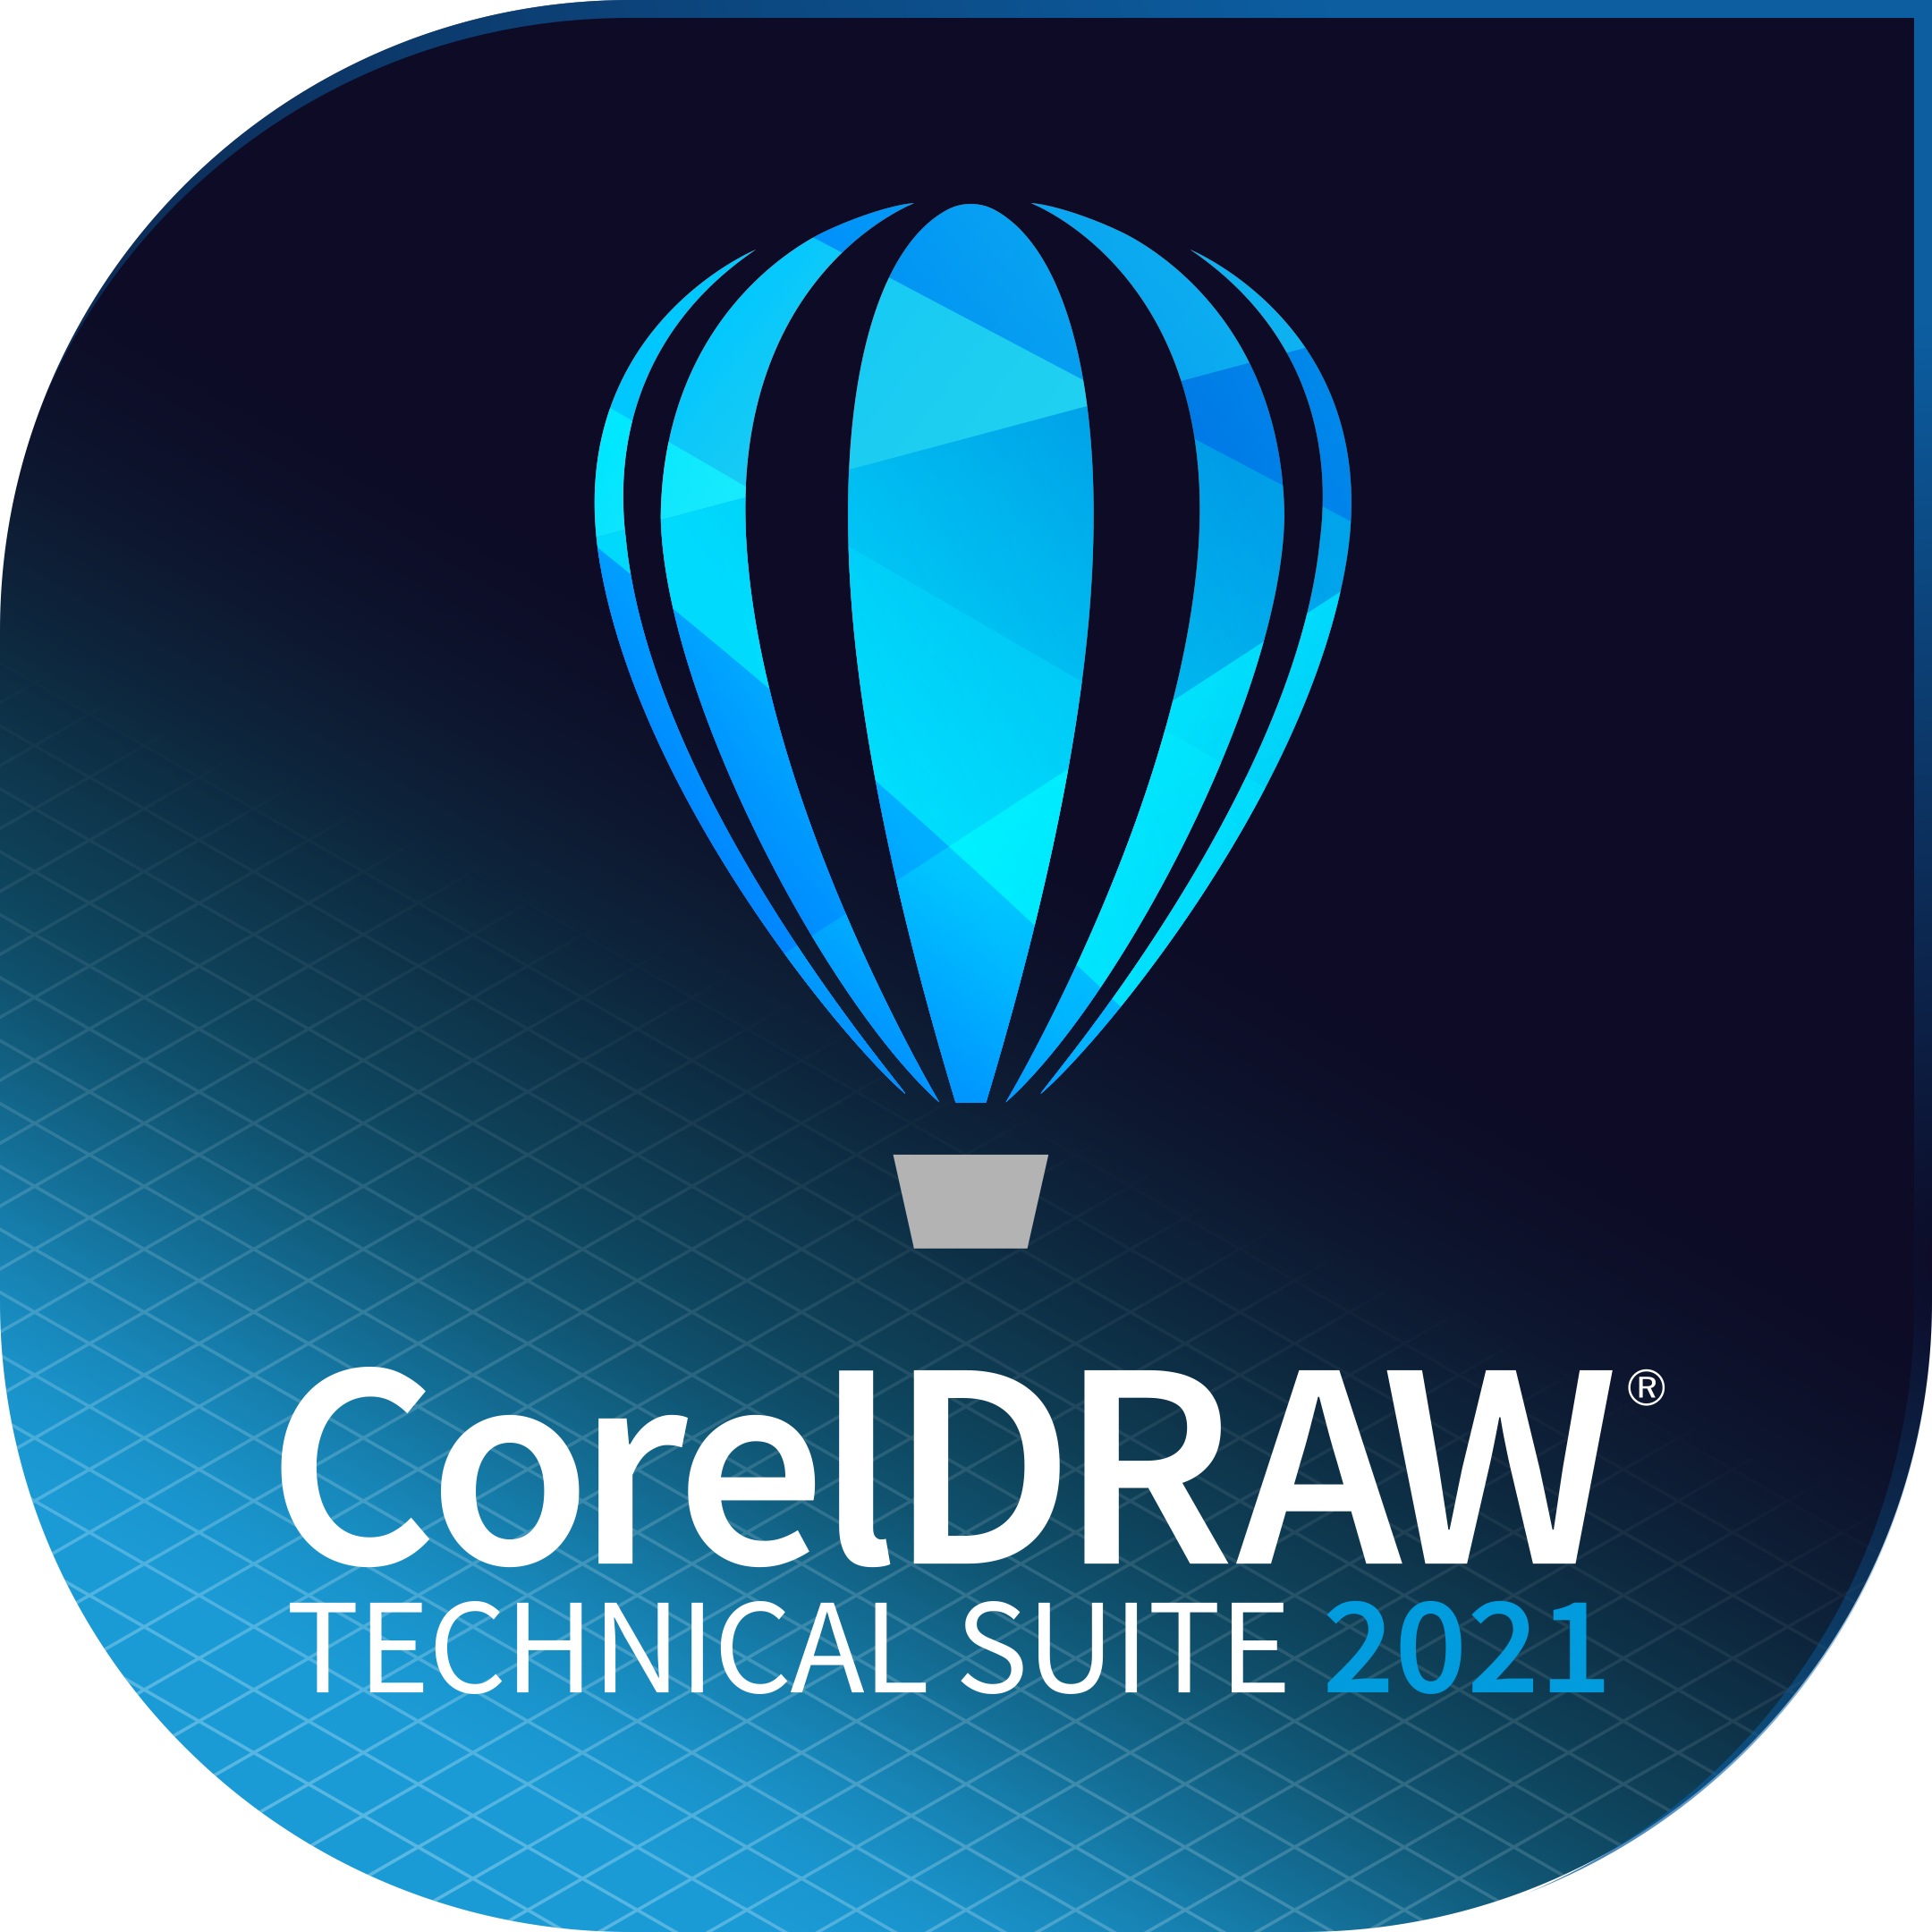 Coreldraw Technical Suite 2021. Coreldraw цена. Coreldraw Формат. Coreldraw купить. Corel купить